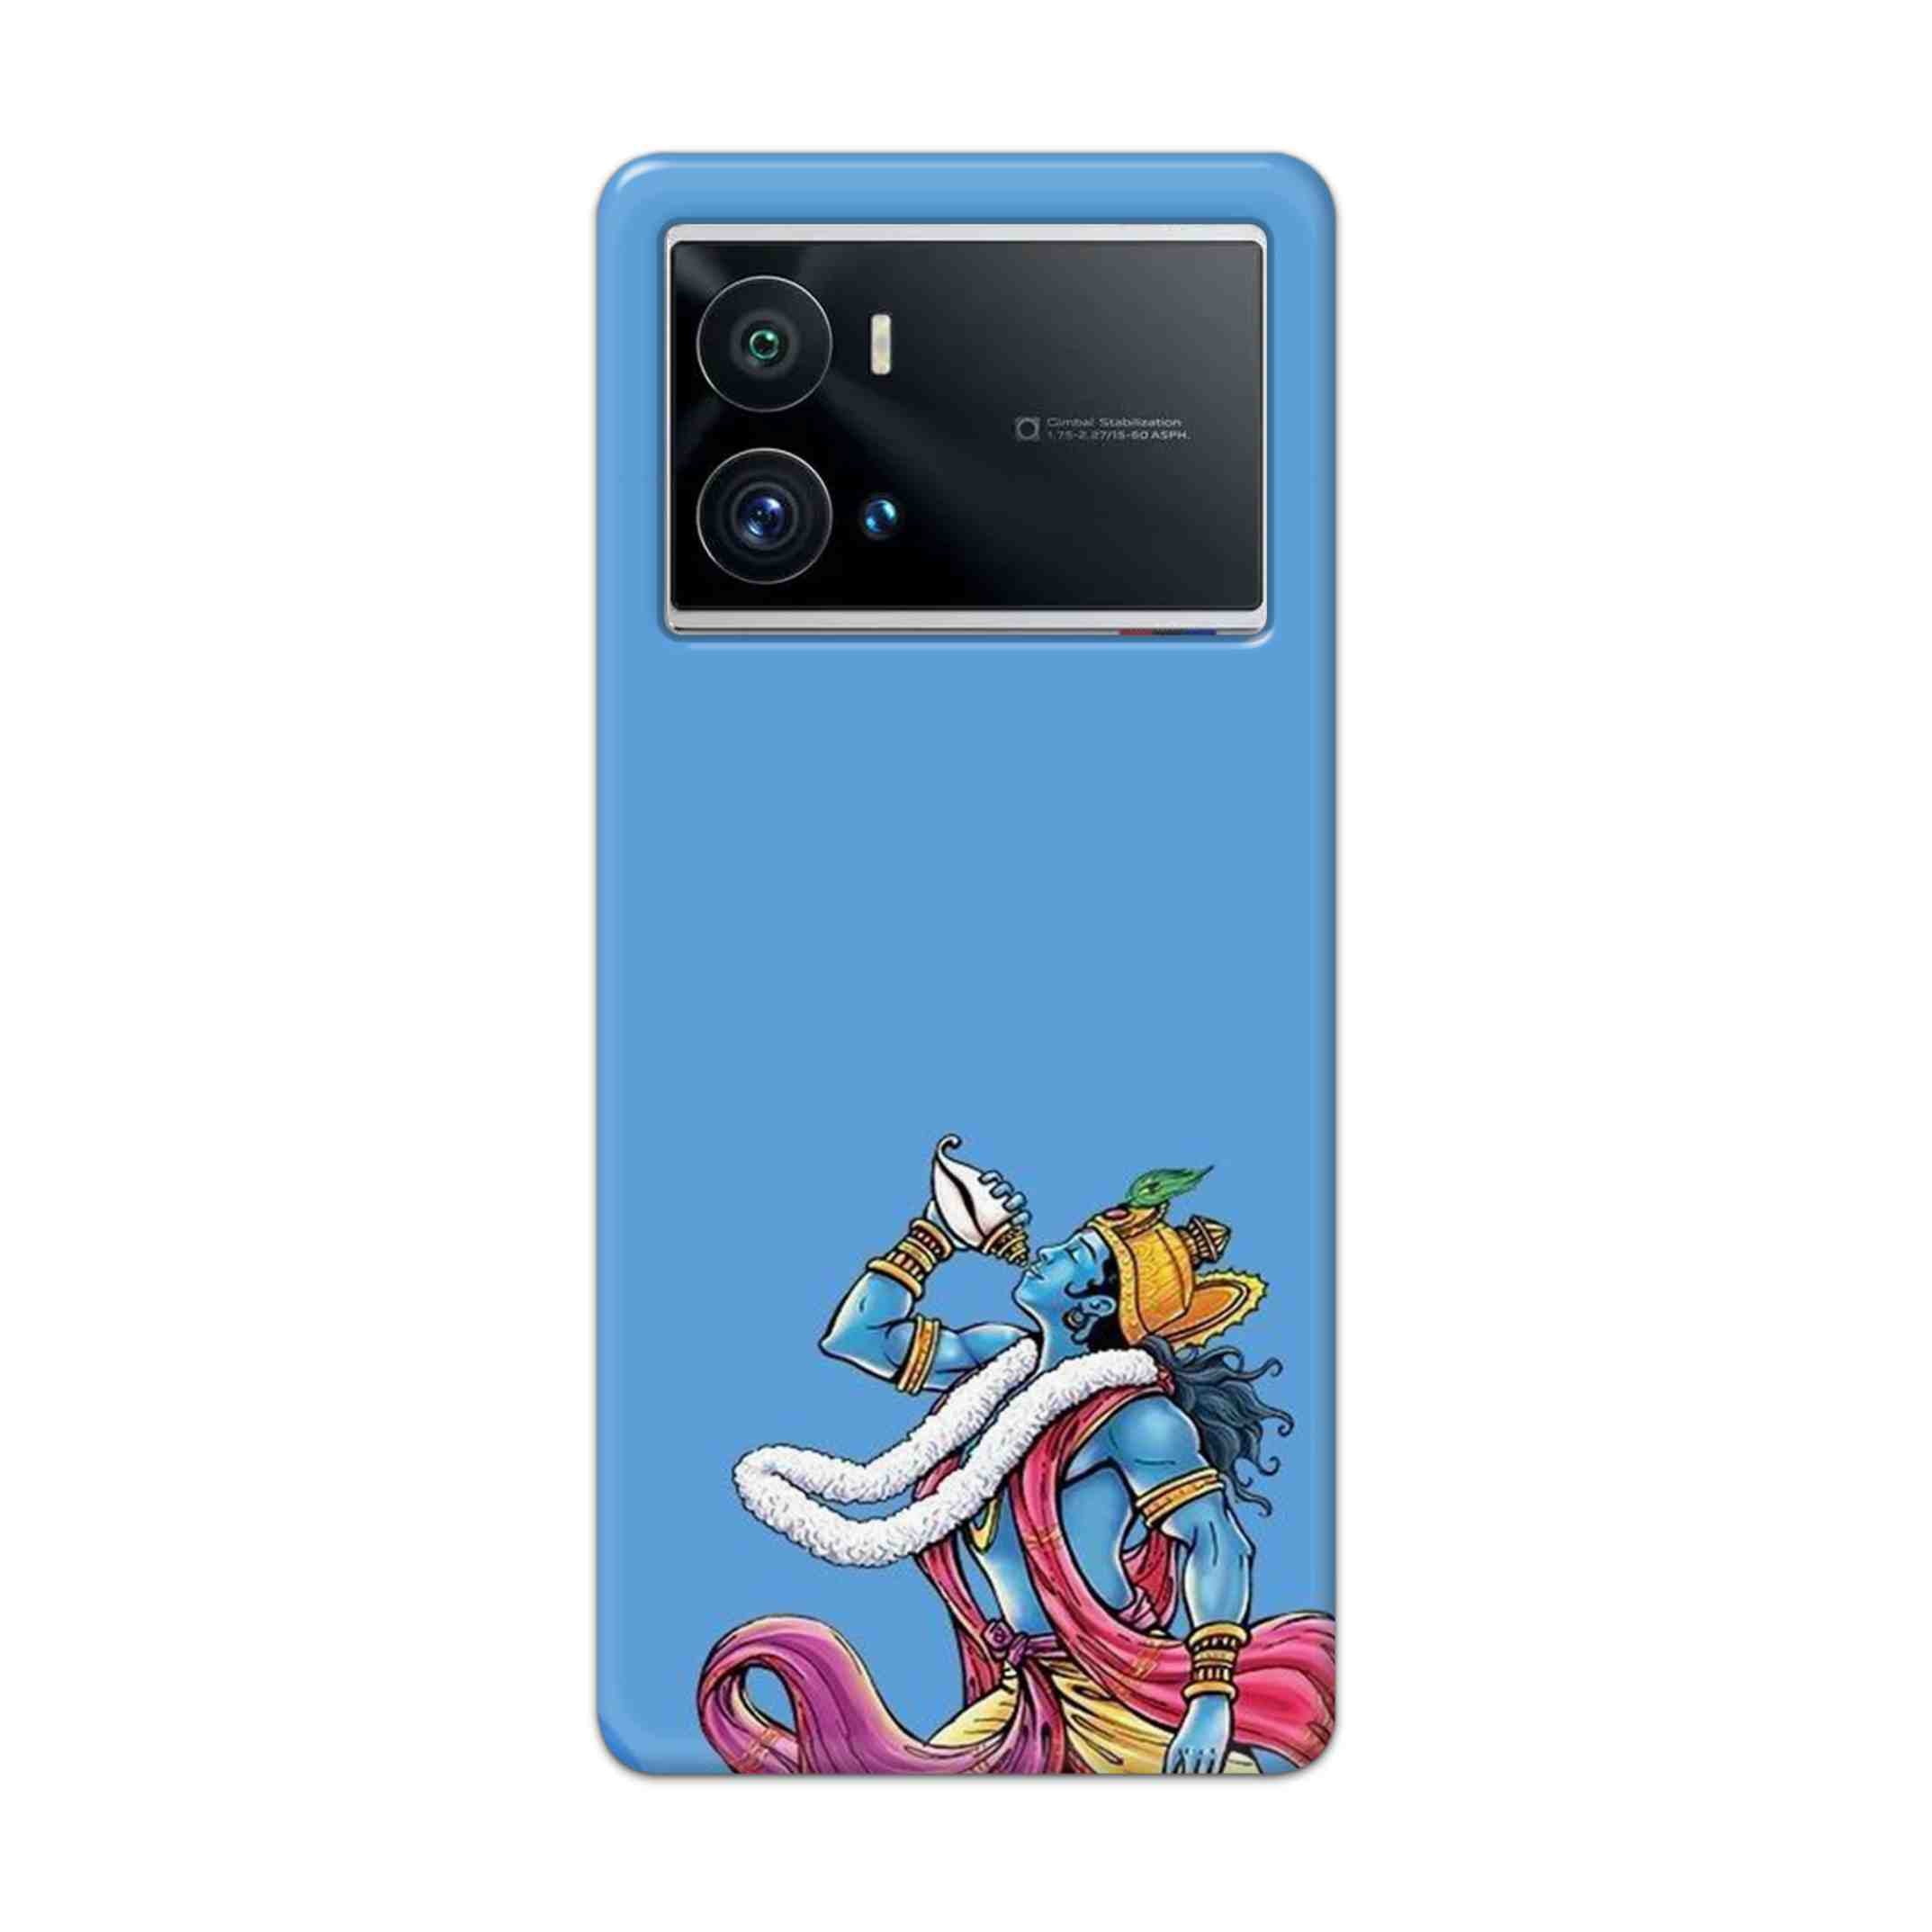 Buy Krishna Hard Back Mobile Phone Case Cover For iQOO 9 Pro 5G Online